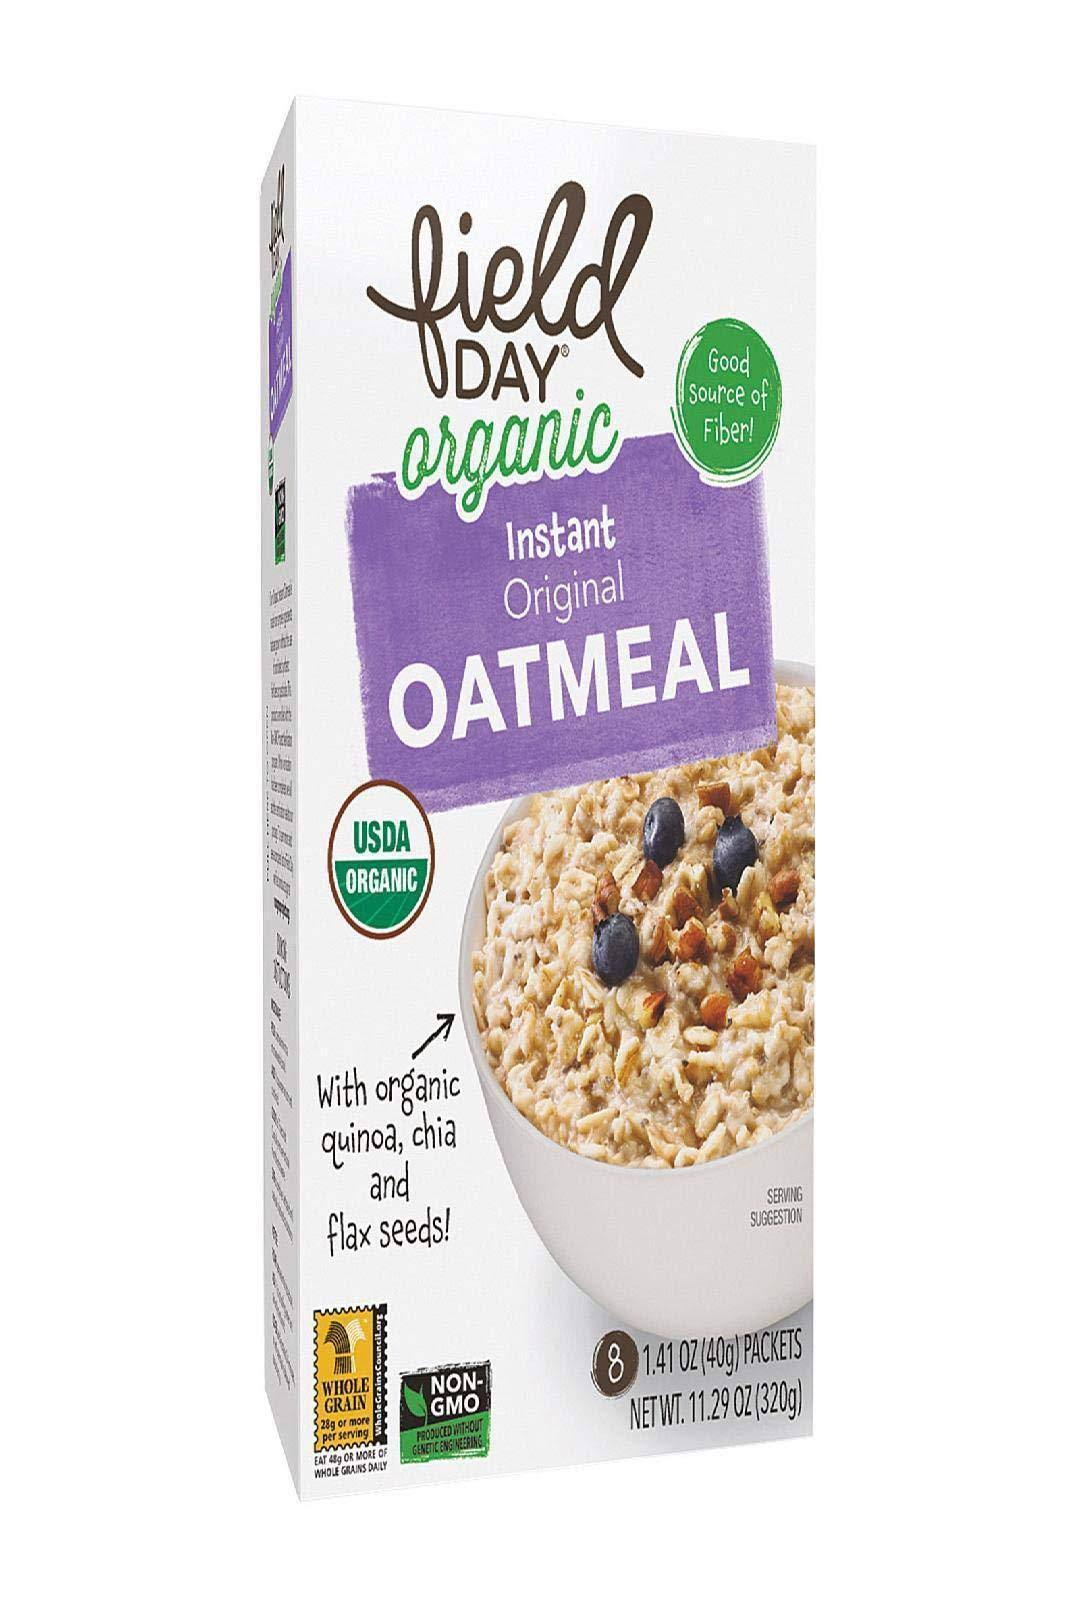 Field Day Organic Instant Original Oatmeal - Oatmeal - Case Of 6 - 11.29 Oz.